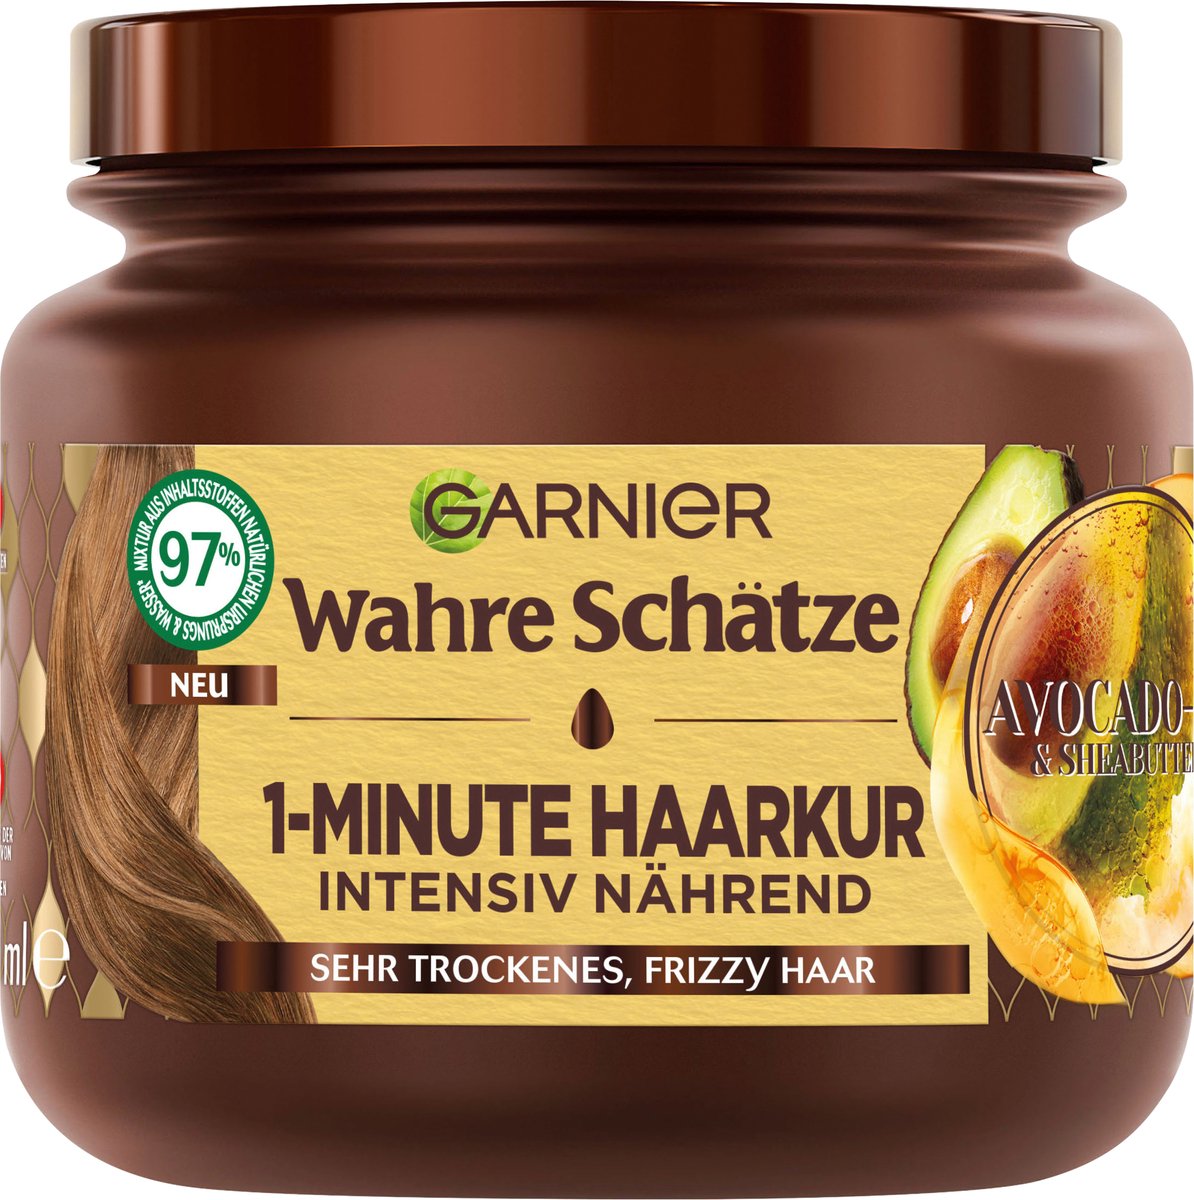 Wahre Schätze Haarbehandeling 1-Minuut Avocado-olie & Sheaboter, 340 ml